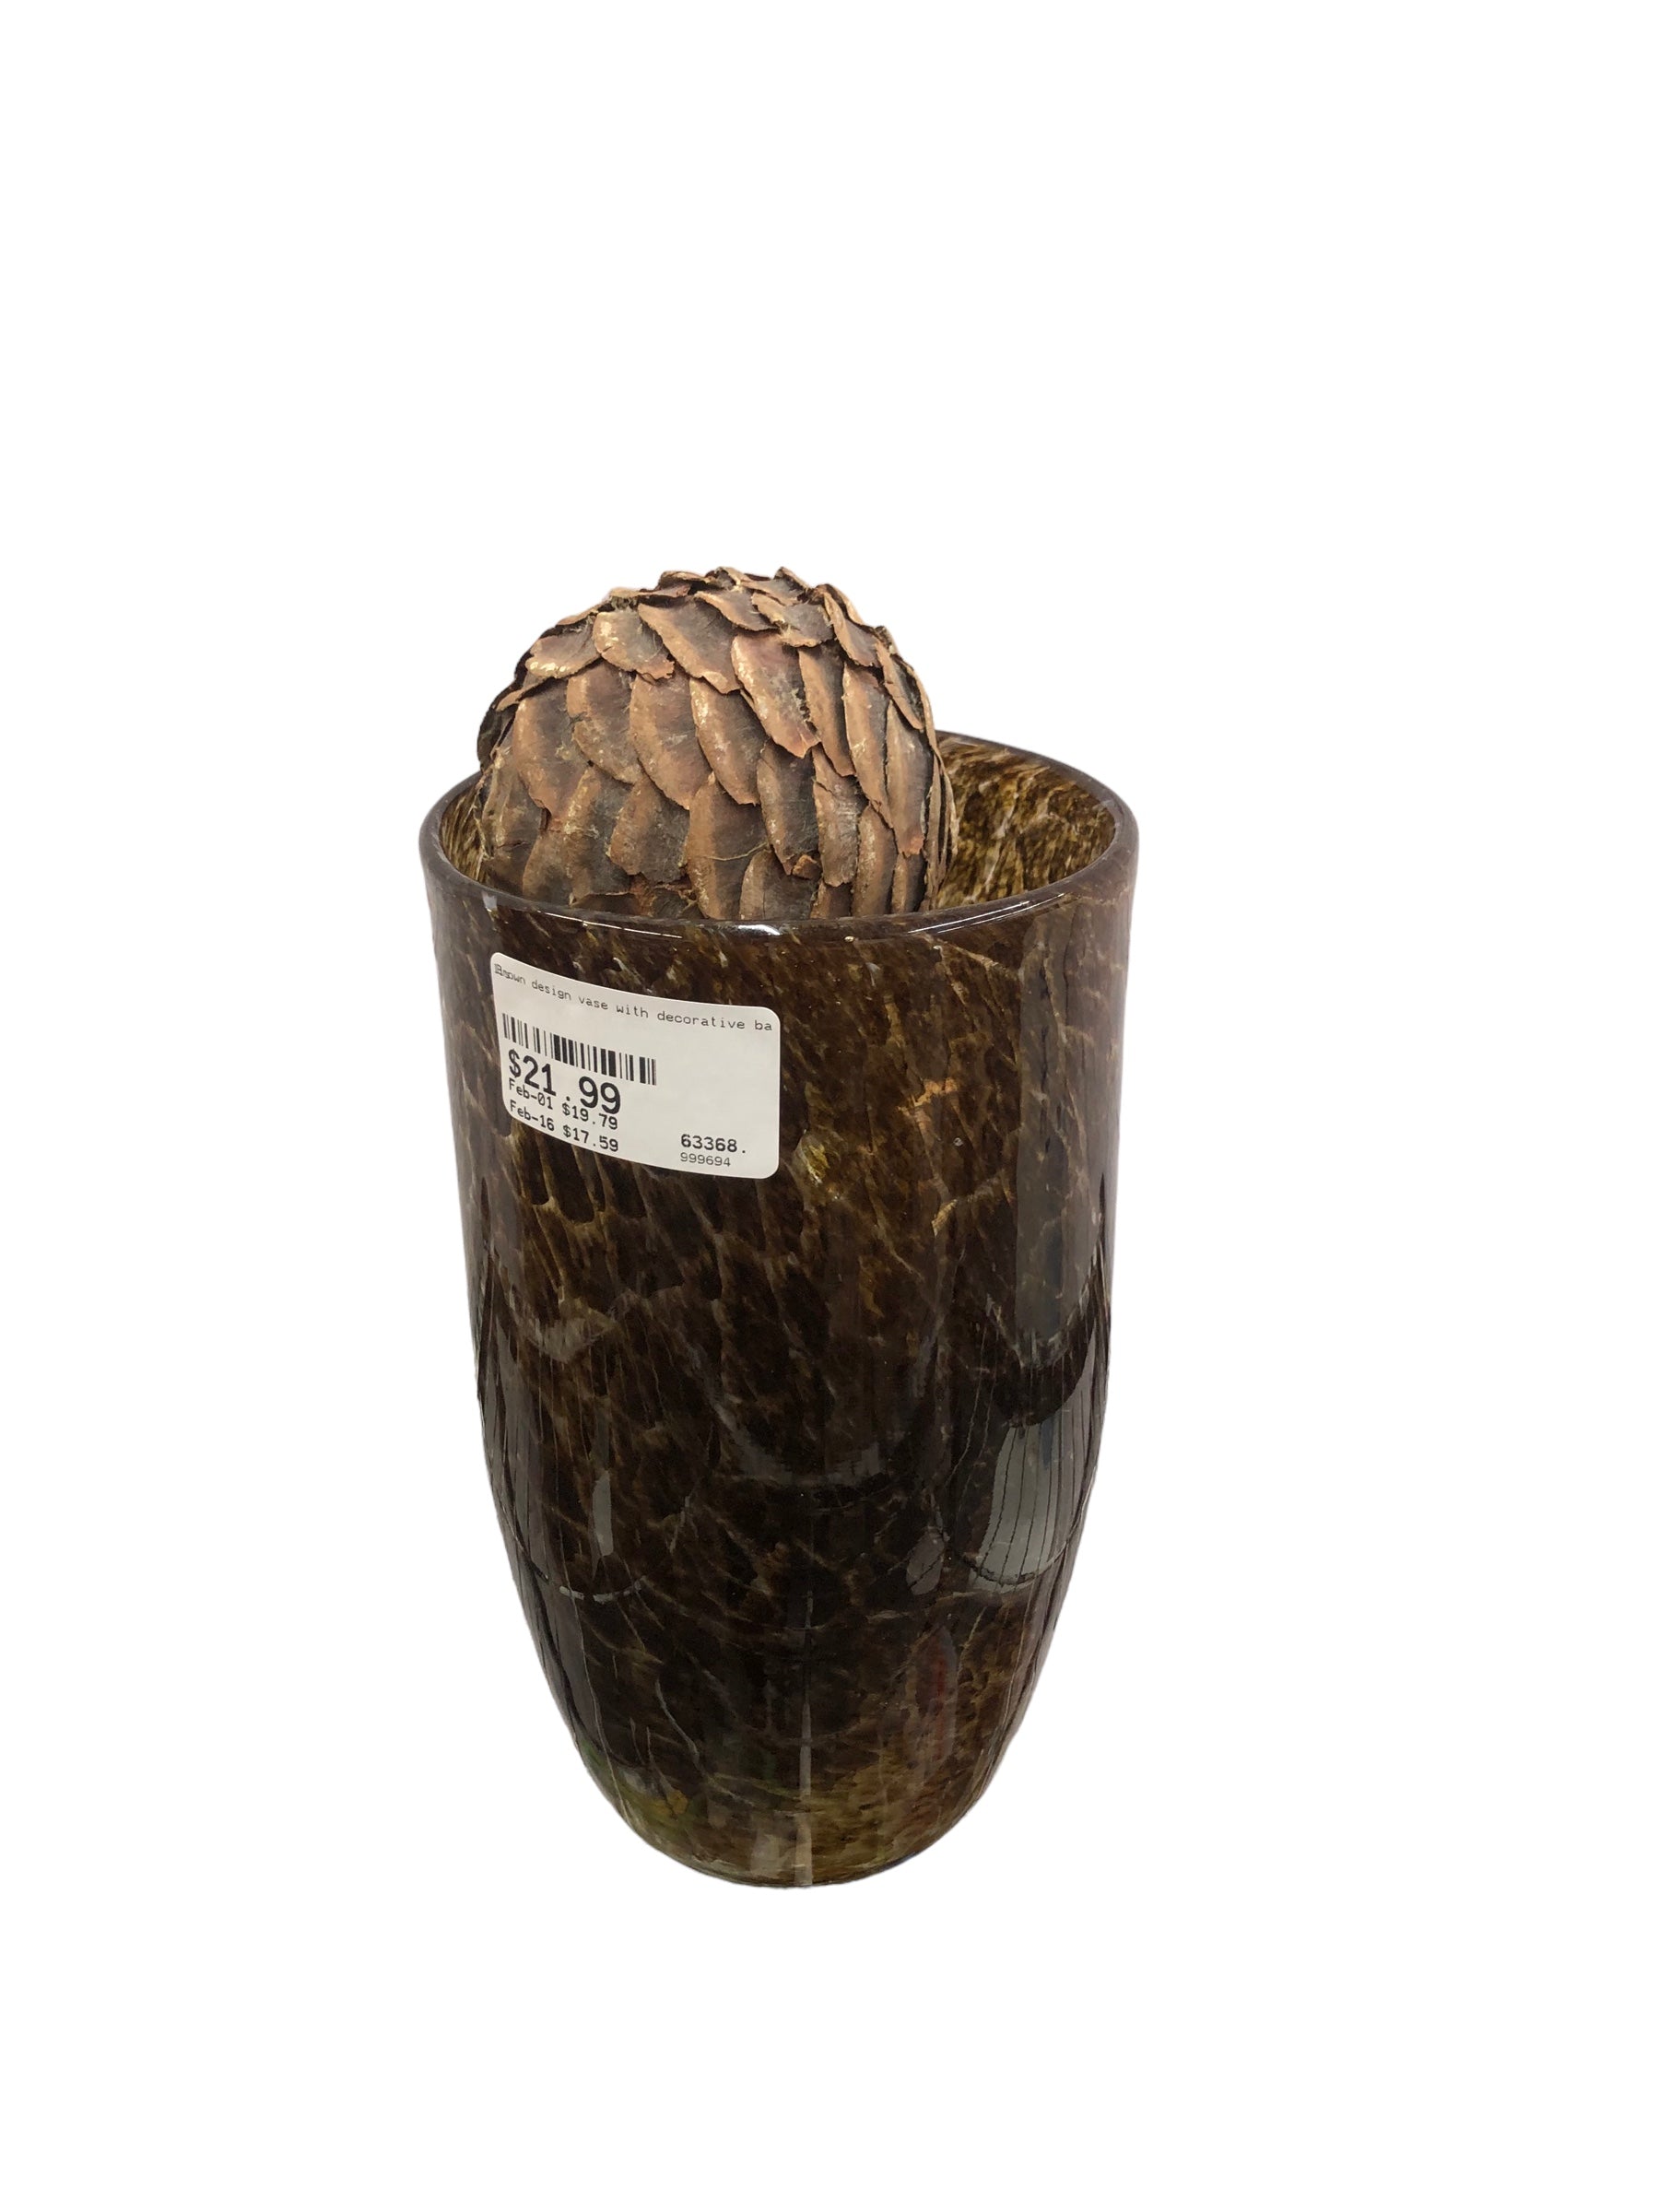 Brown design vase with decorative balls